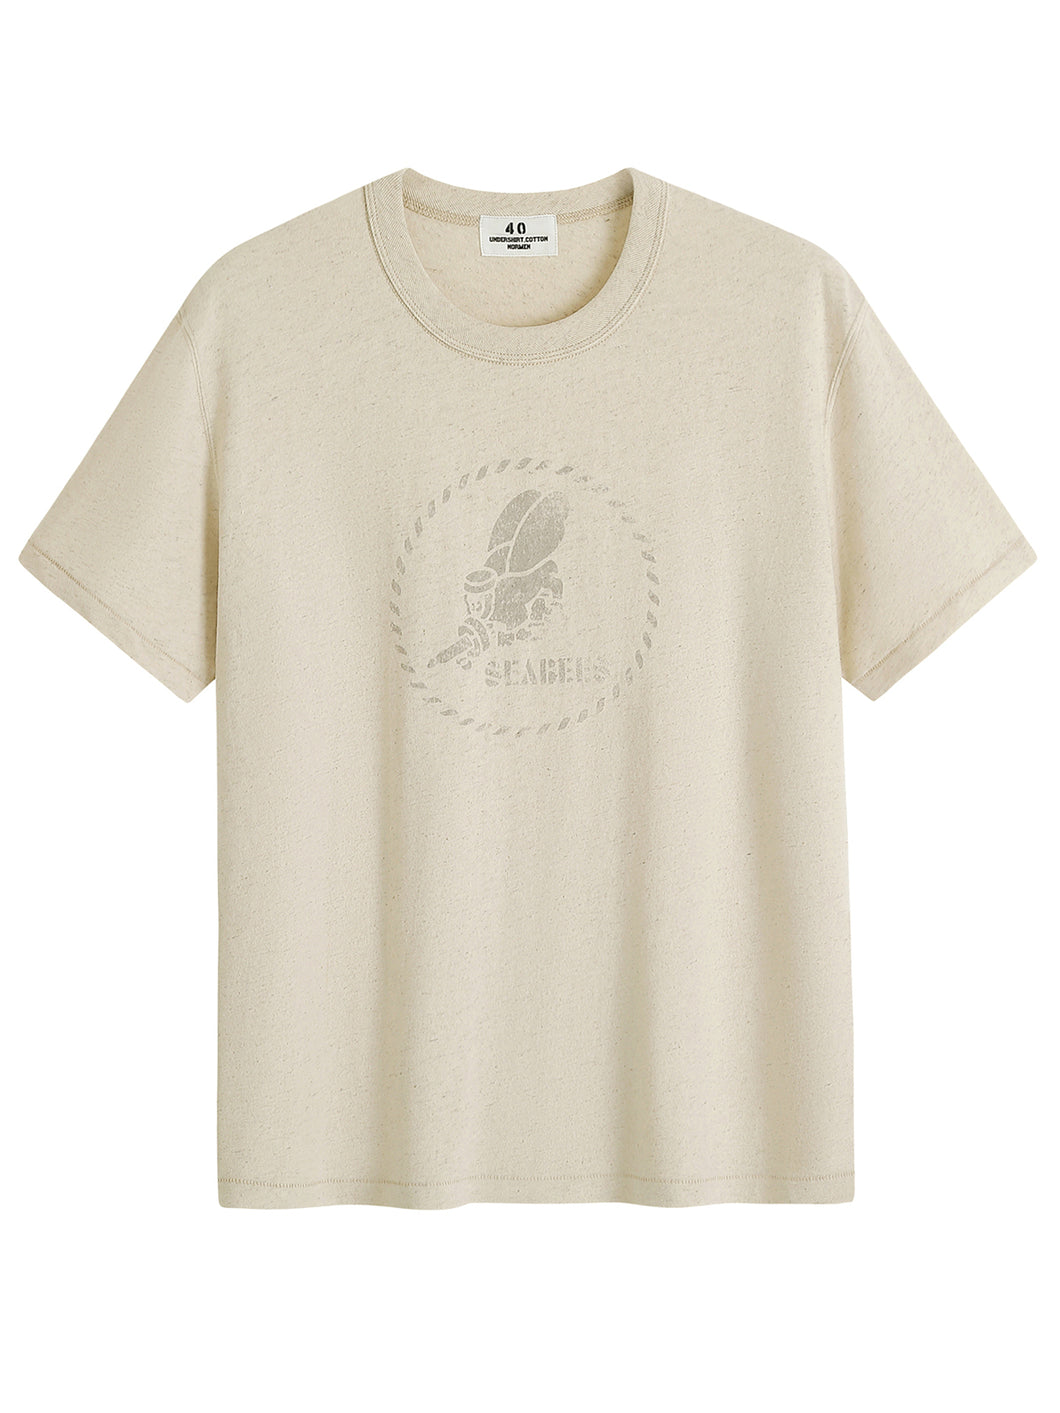 NORMEN(ノーマン) 【旧織機シリーズ】7.2oz 米海軍 Tシャツ メンズ 半袖Tee